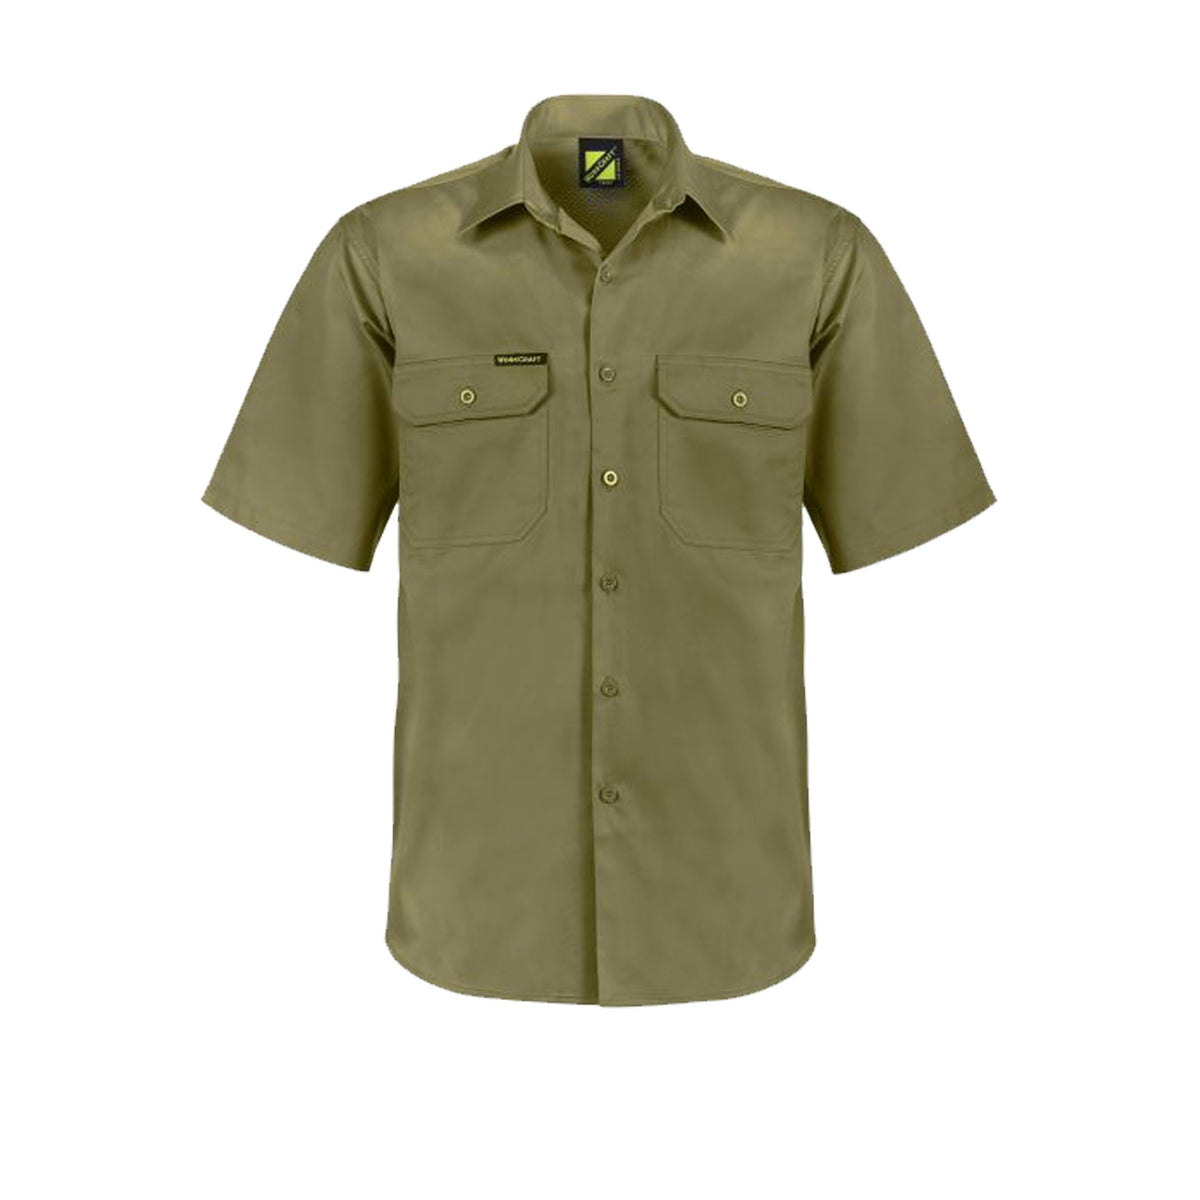 lightweight short sleeve vented cotton drill shirt in khaki